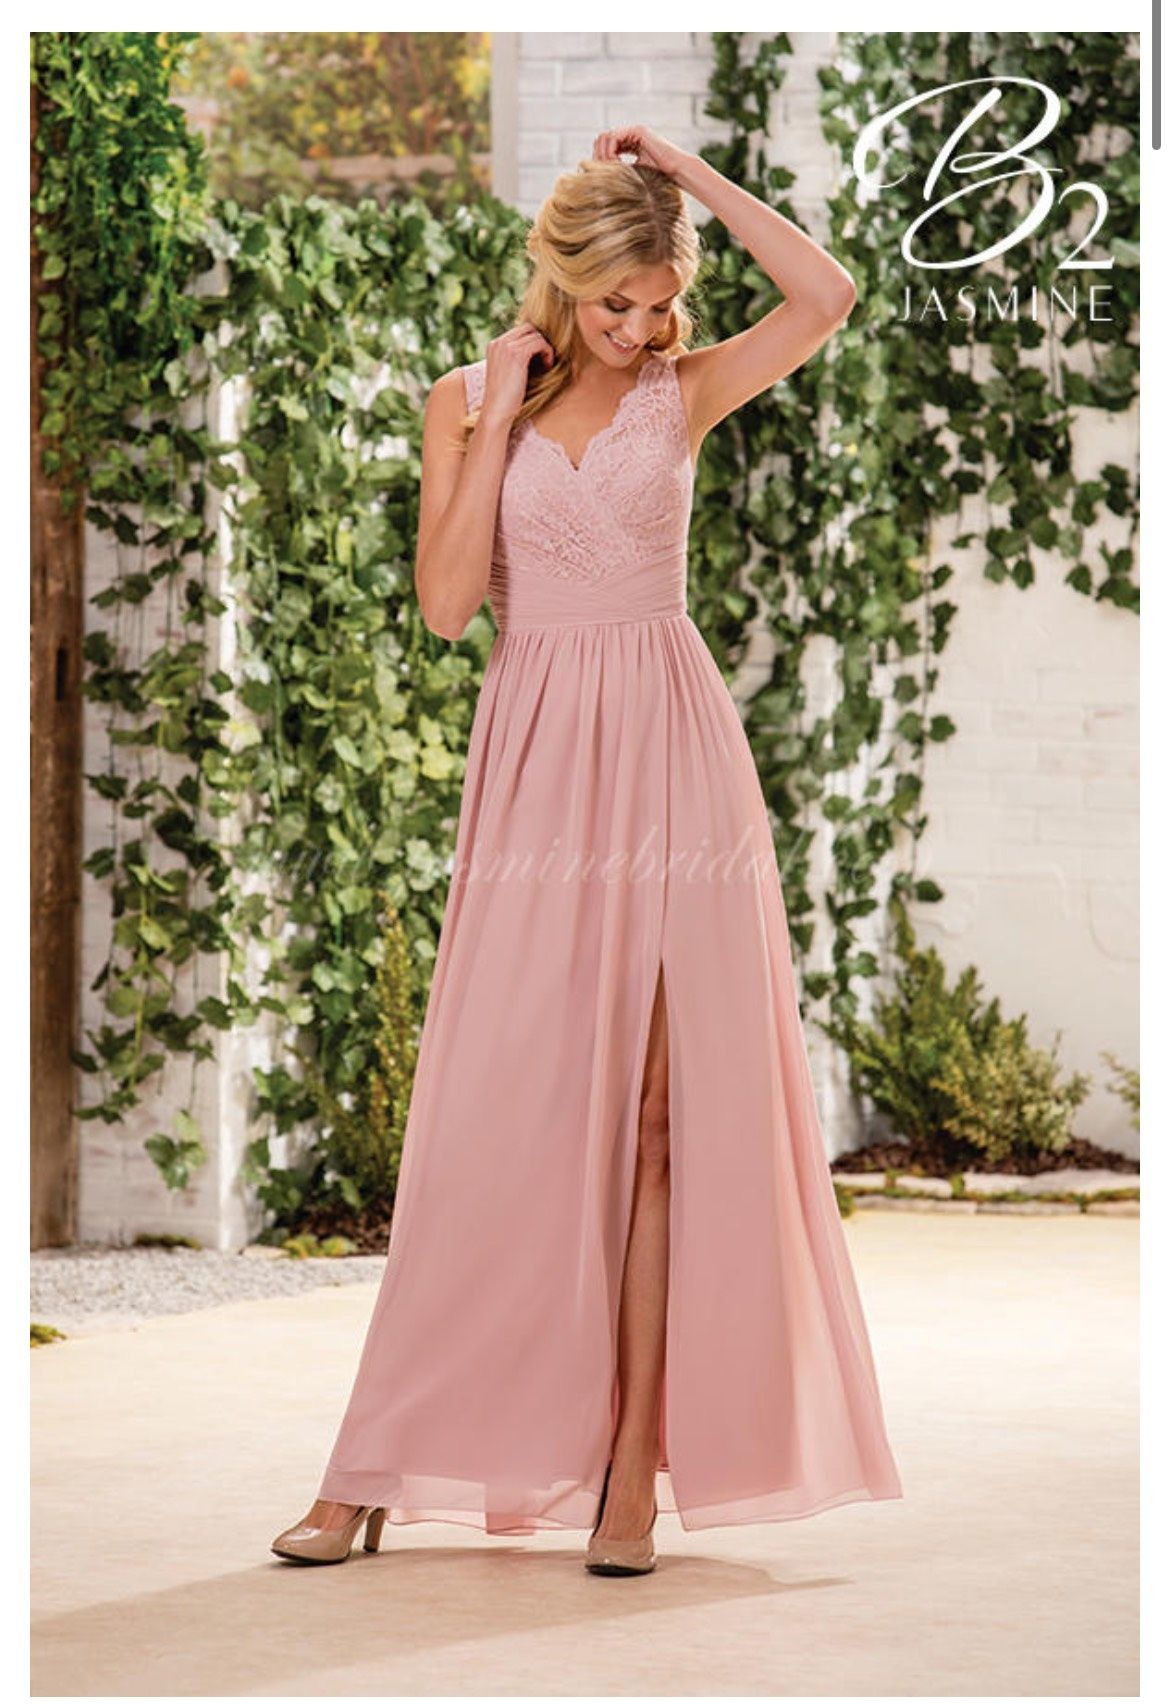 A-Line Lace Pink Prom Dresses V-Neck Cap-Sleeves Dresses